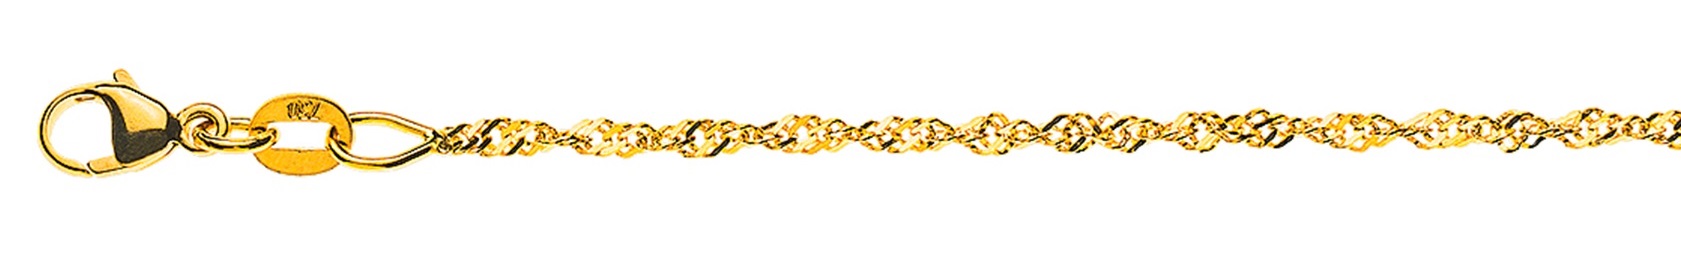 AURONOS Style Necklace Yellow Gold 9K Singapore Chain 60cm 1.5mm